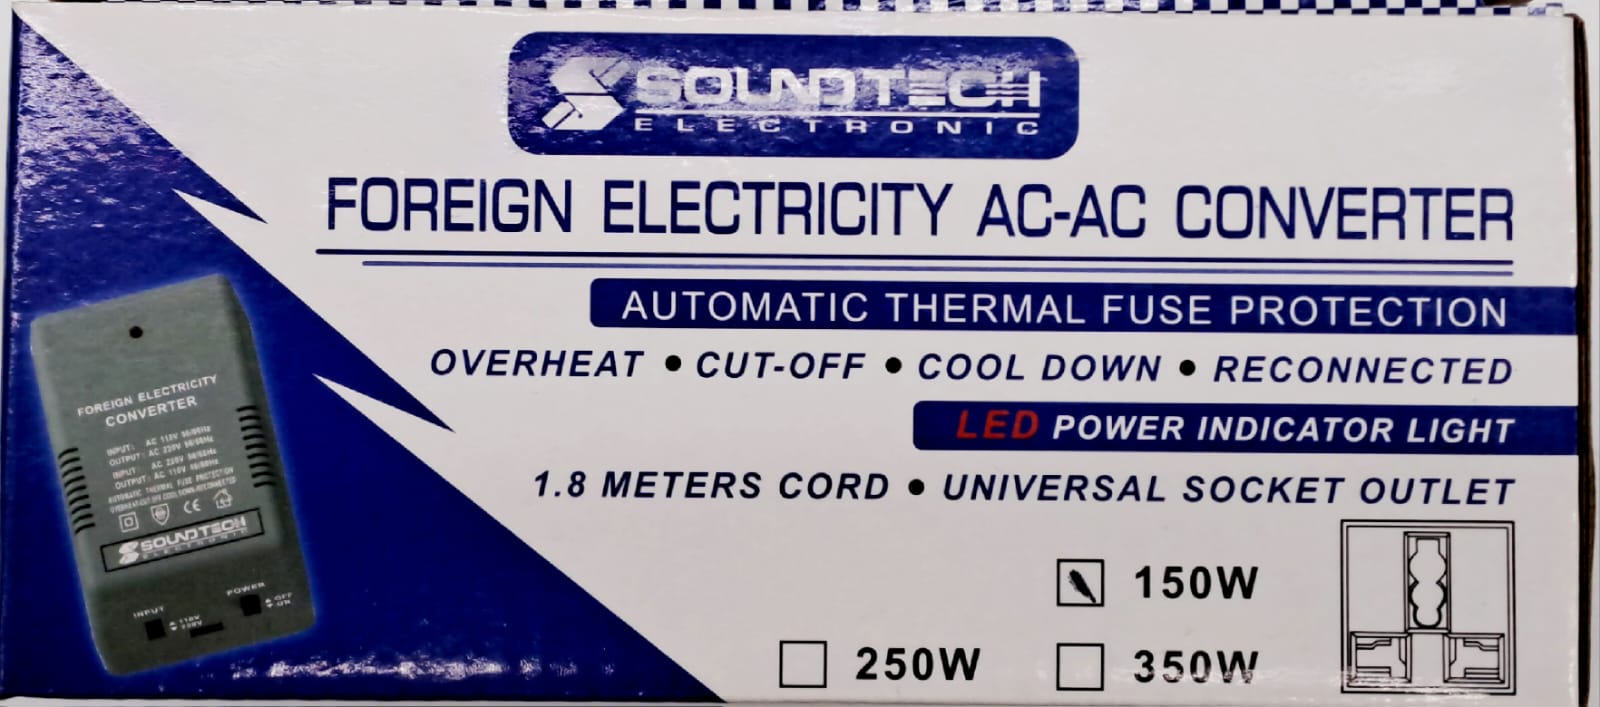 Soundtech Foreign Electricity AC-AC Converter 150W